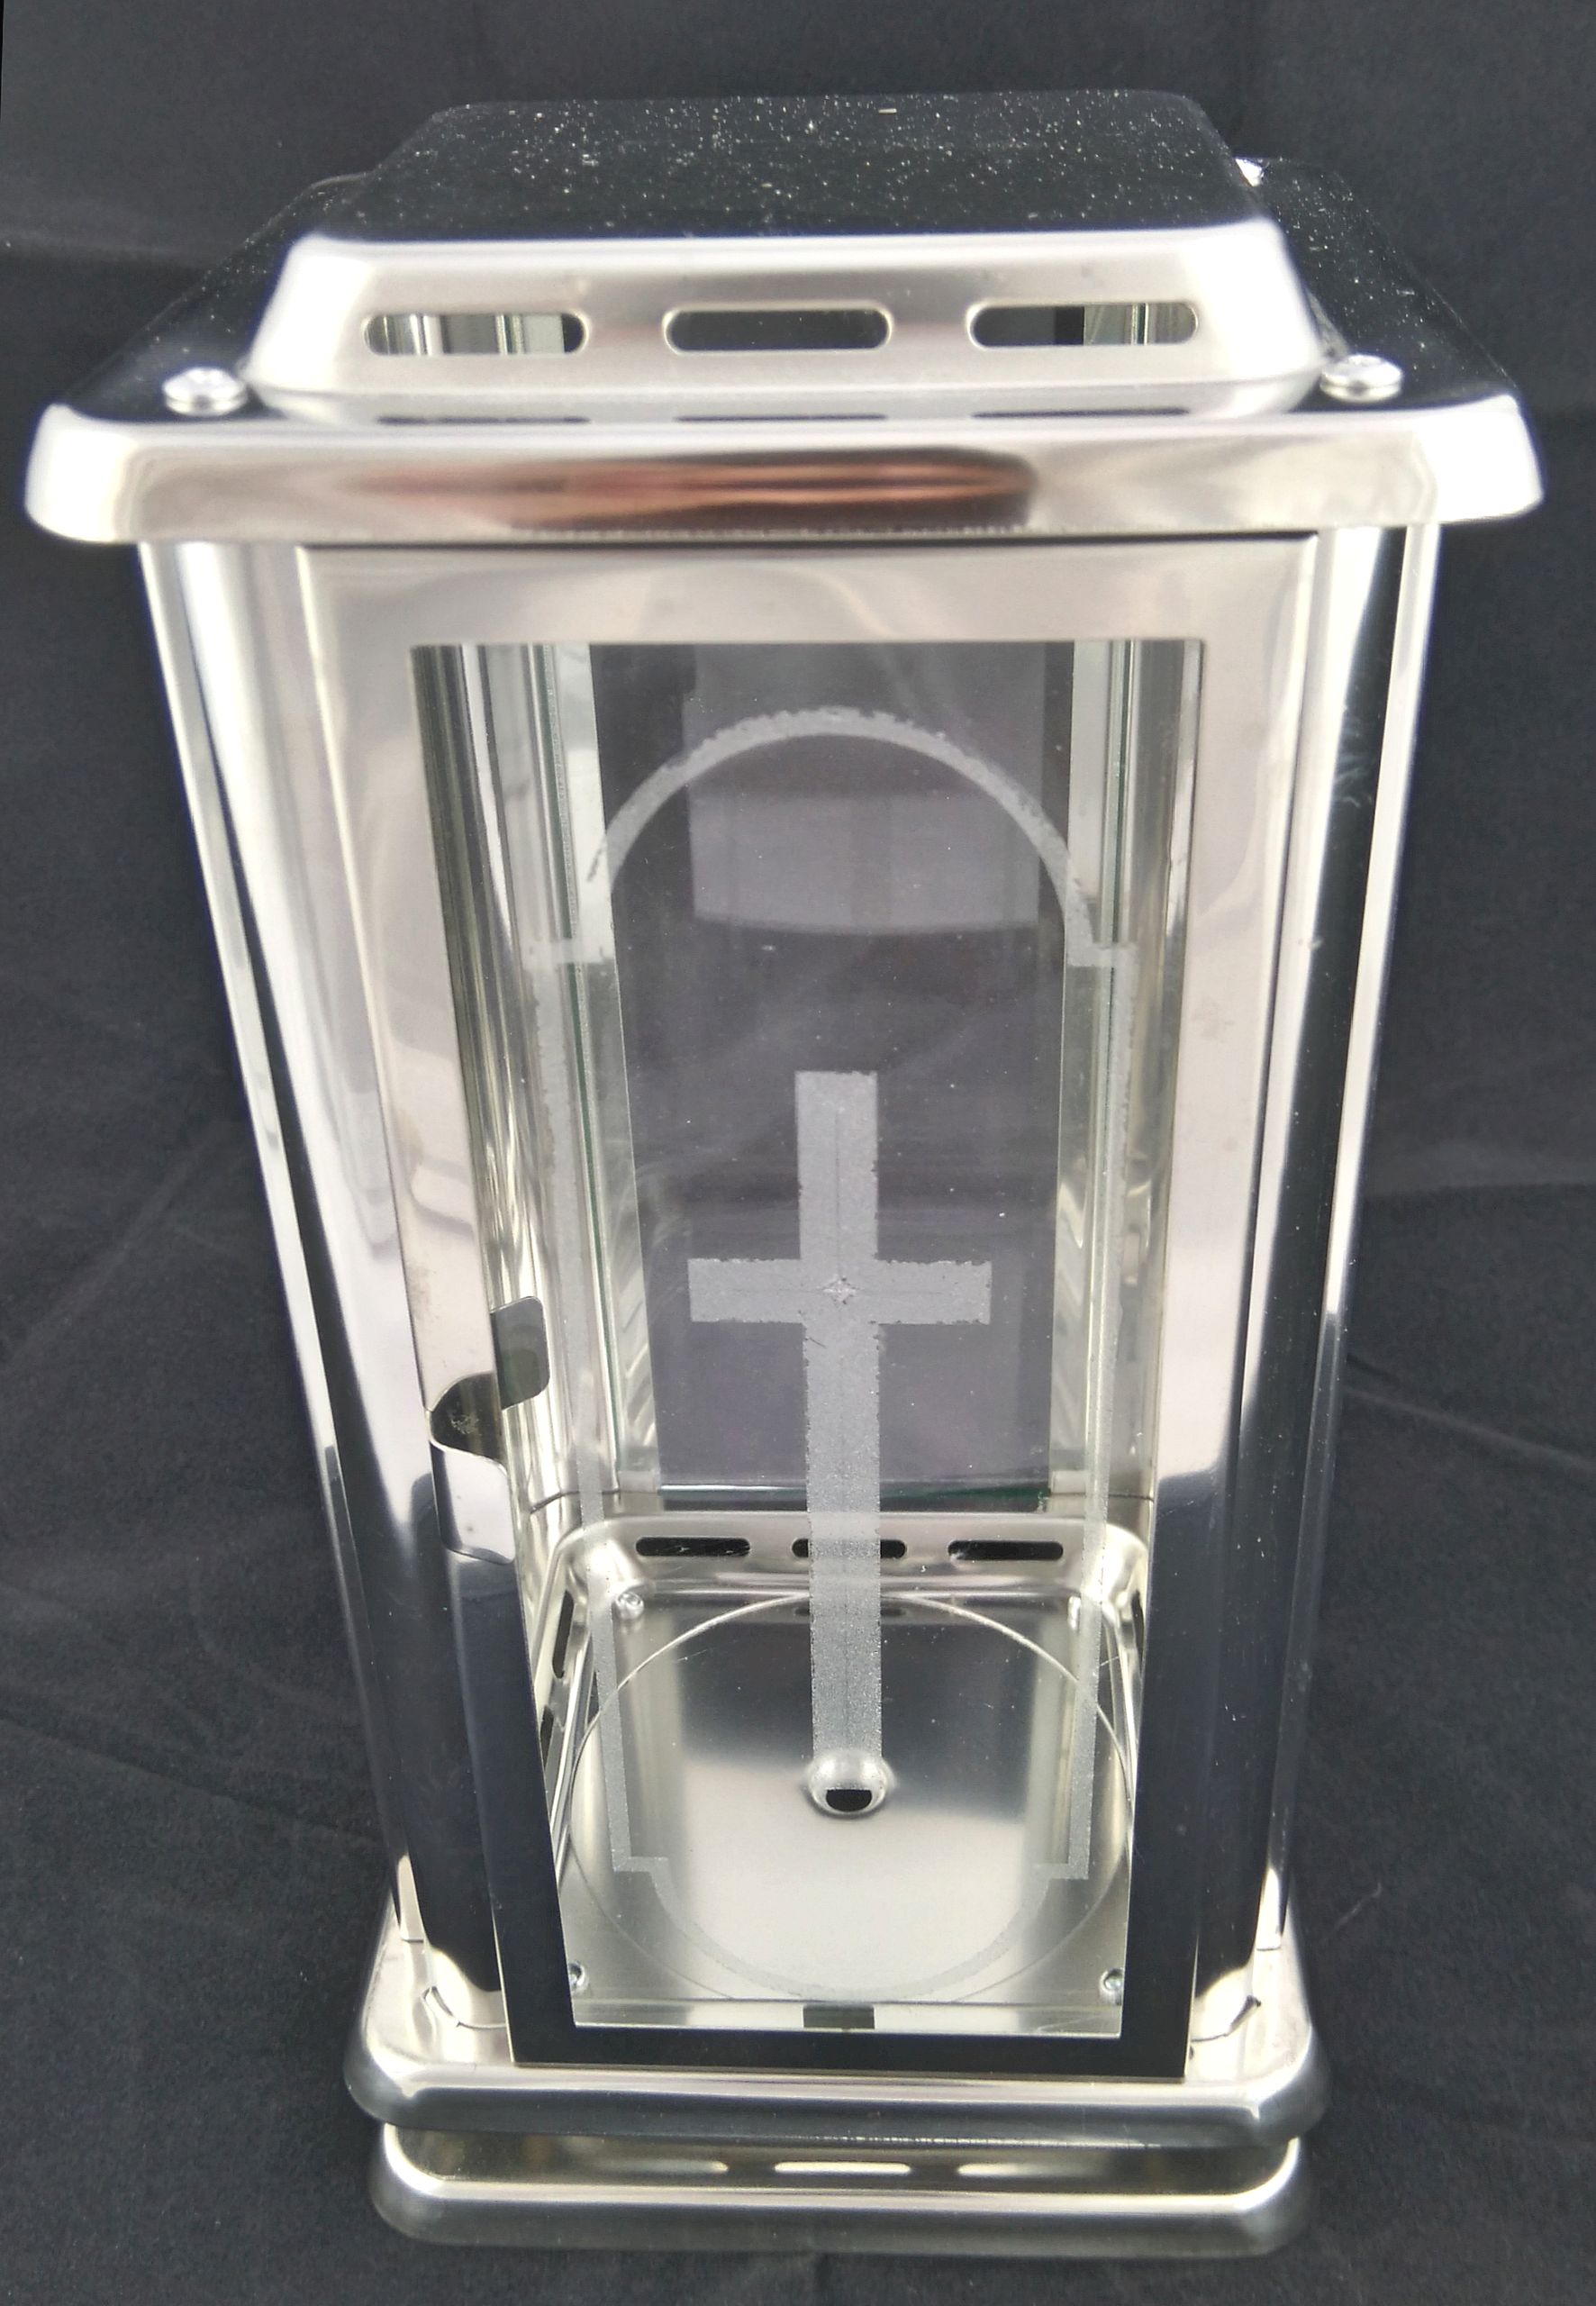 Grablampe "Royal" aus Edelstahl mit Kreuz